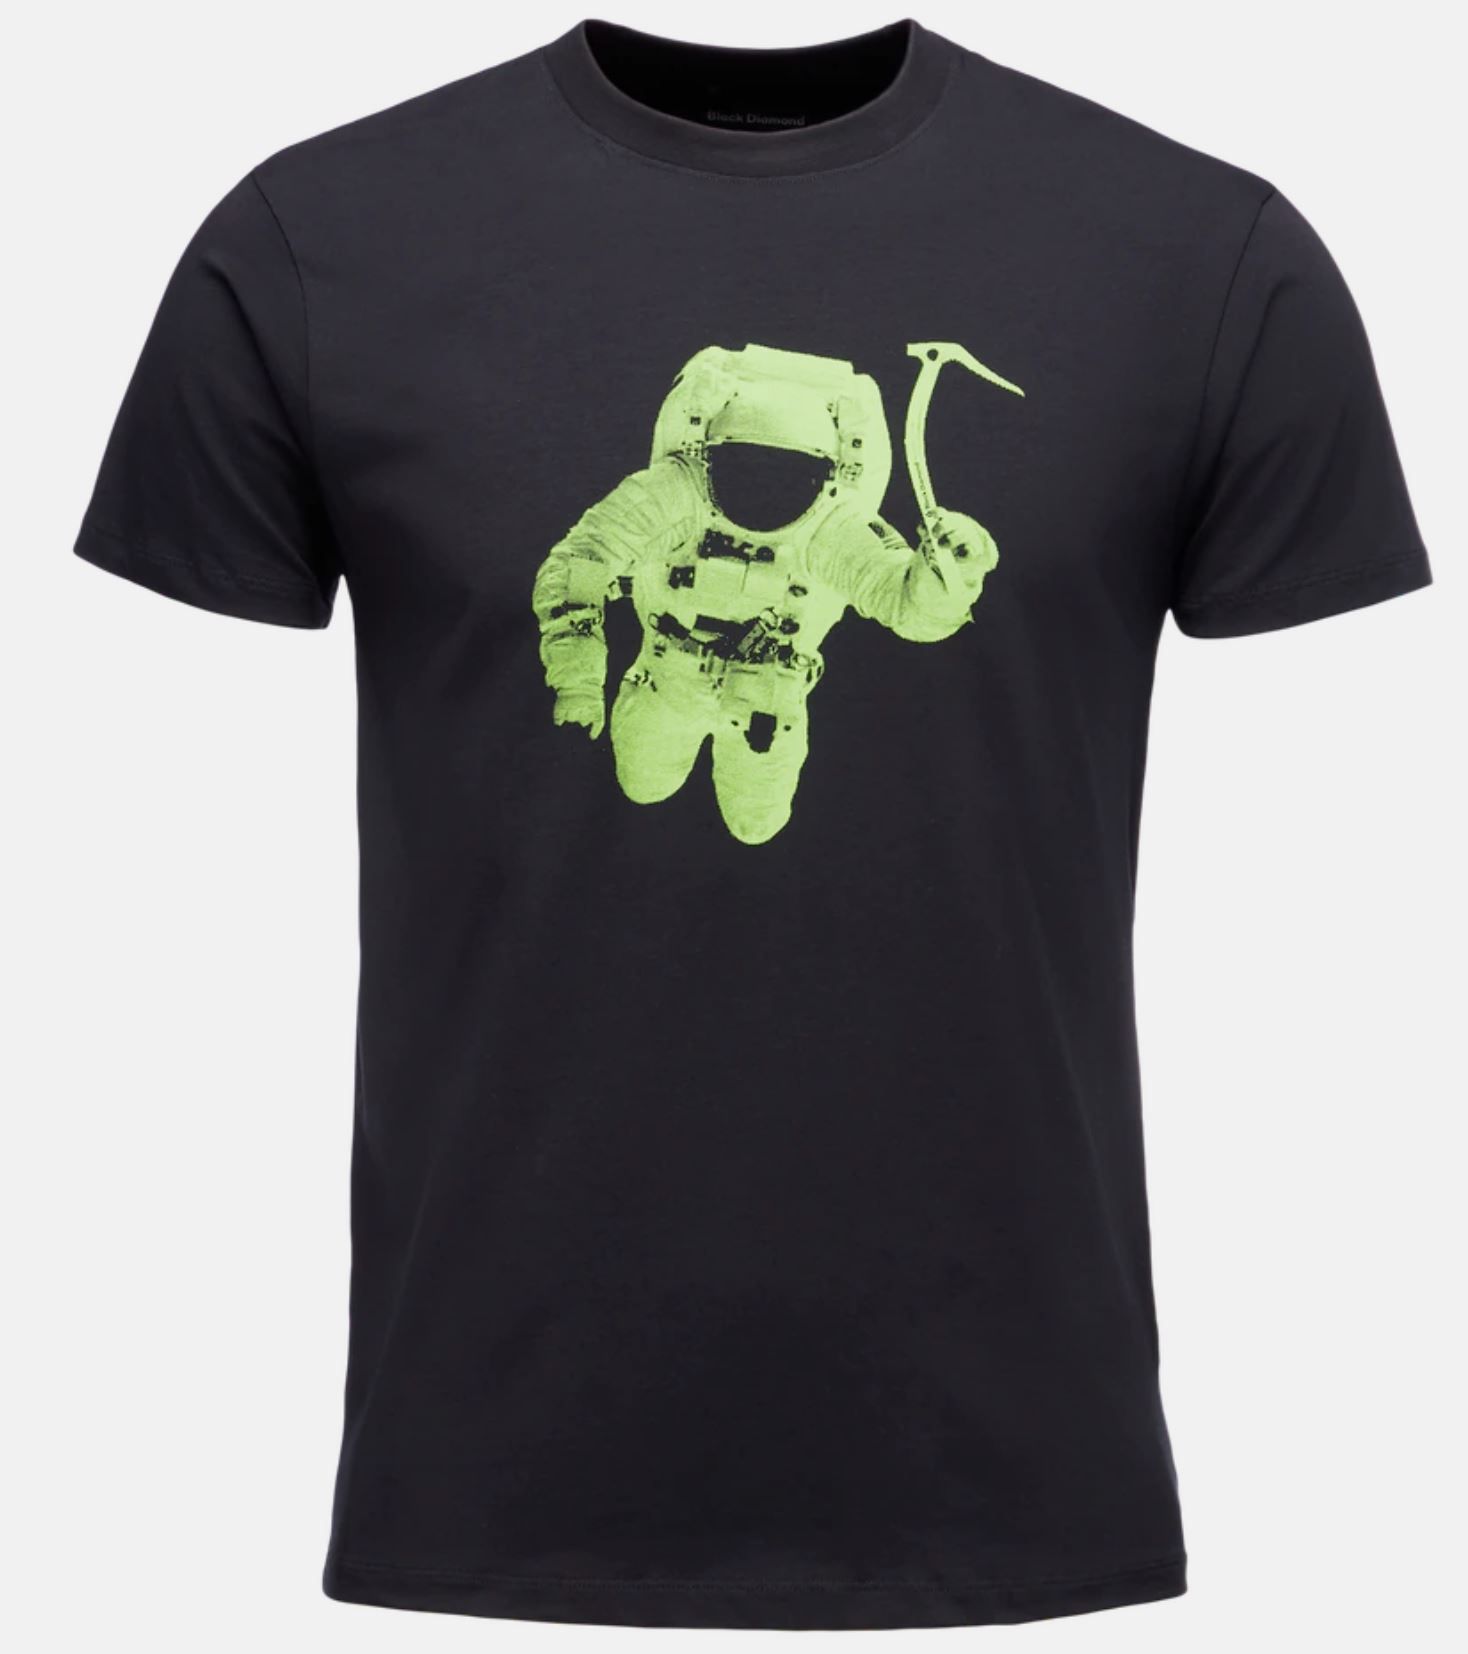 T-Shirt SpaceShot Black Envy Green